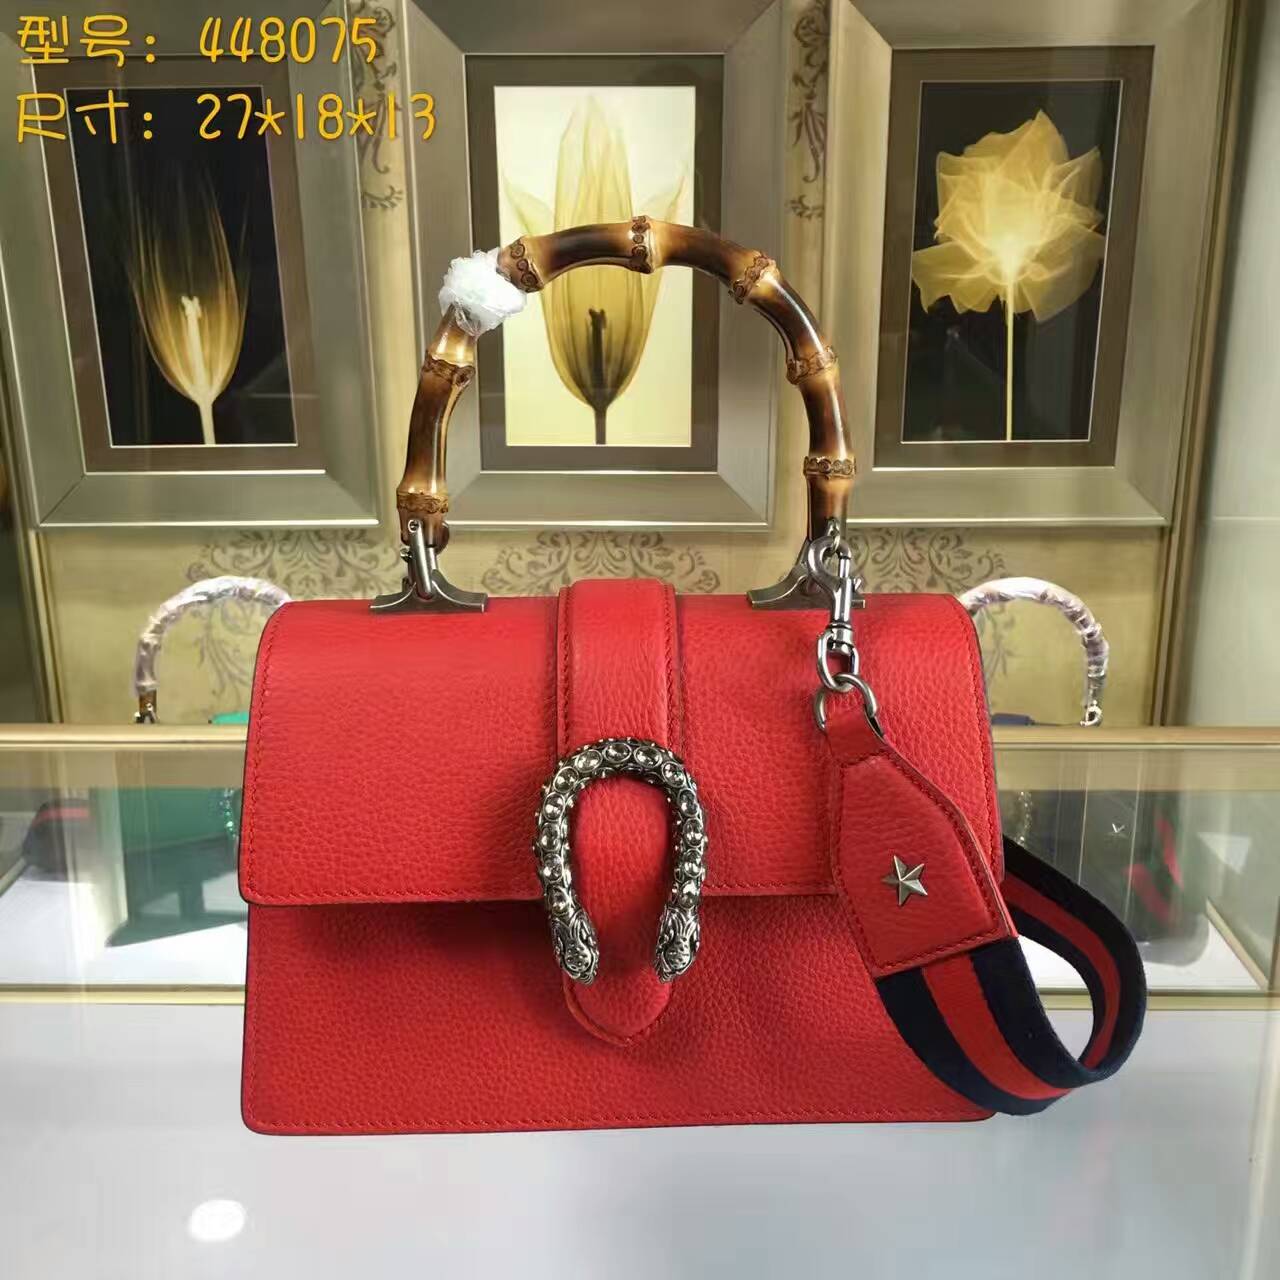 Gucci Dionysus leather top handle bag-448075-9